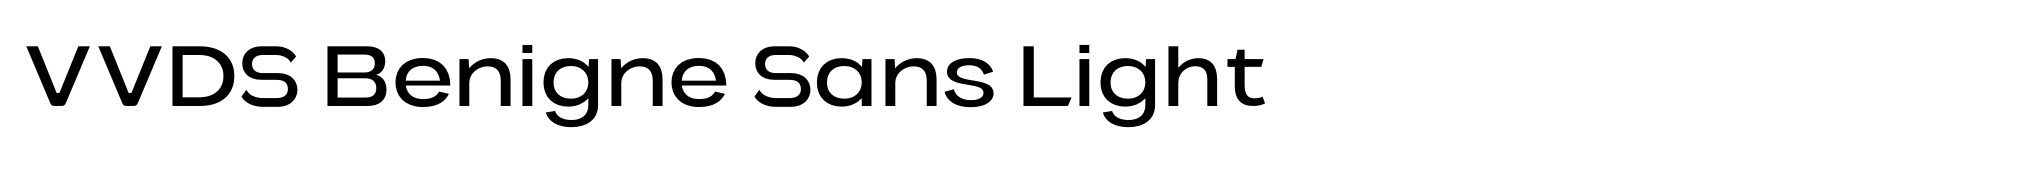 VVDS Benigne Sans Light image